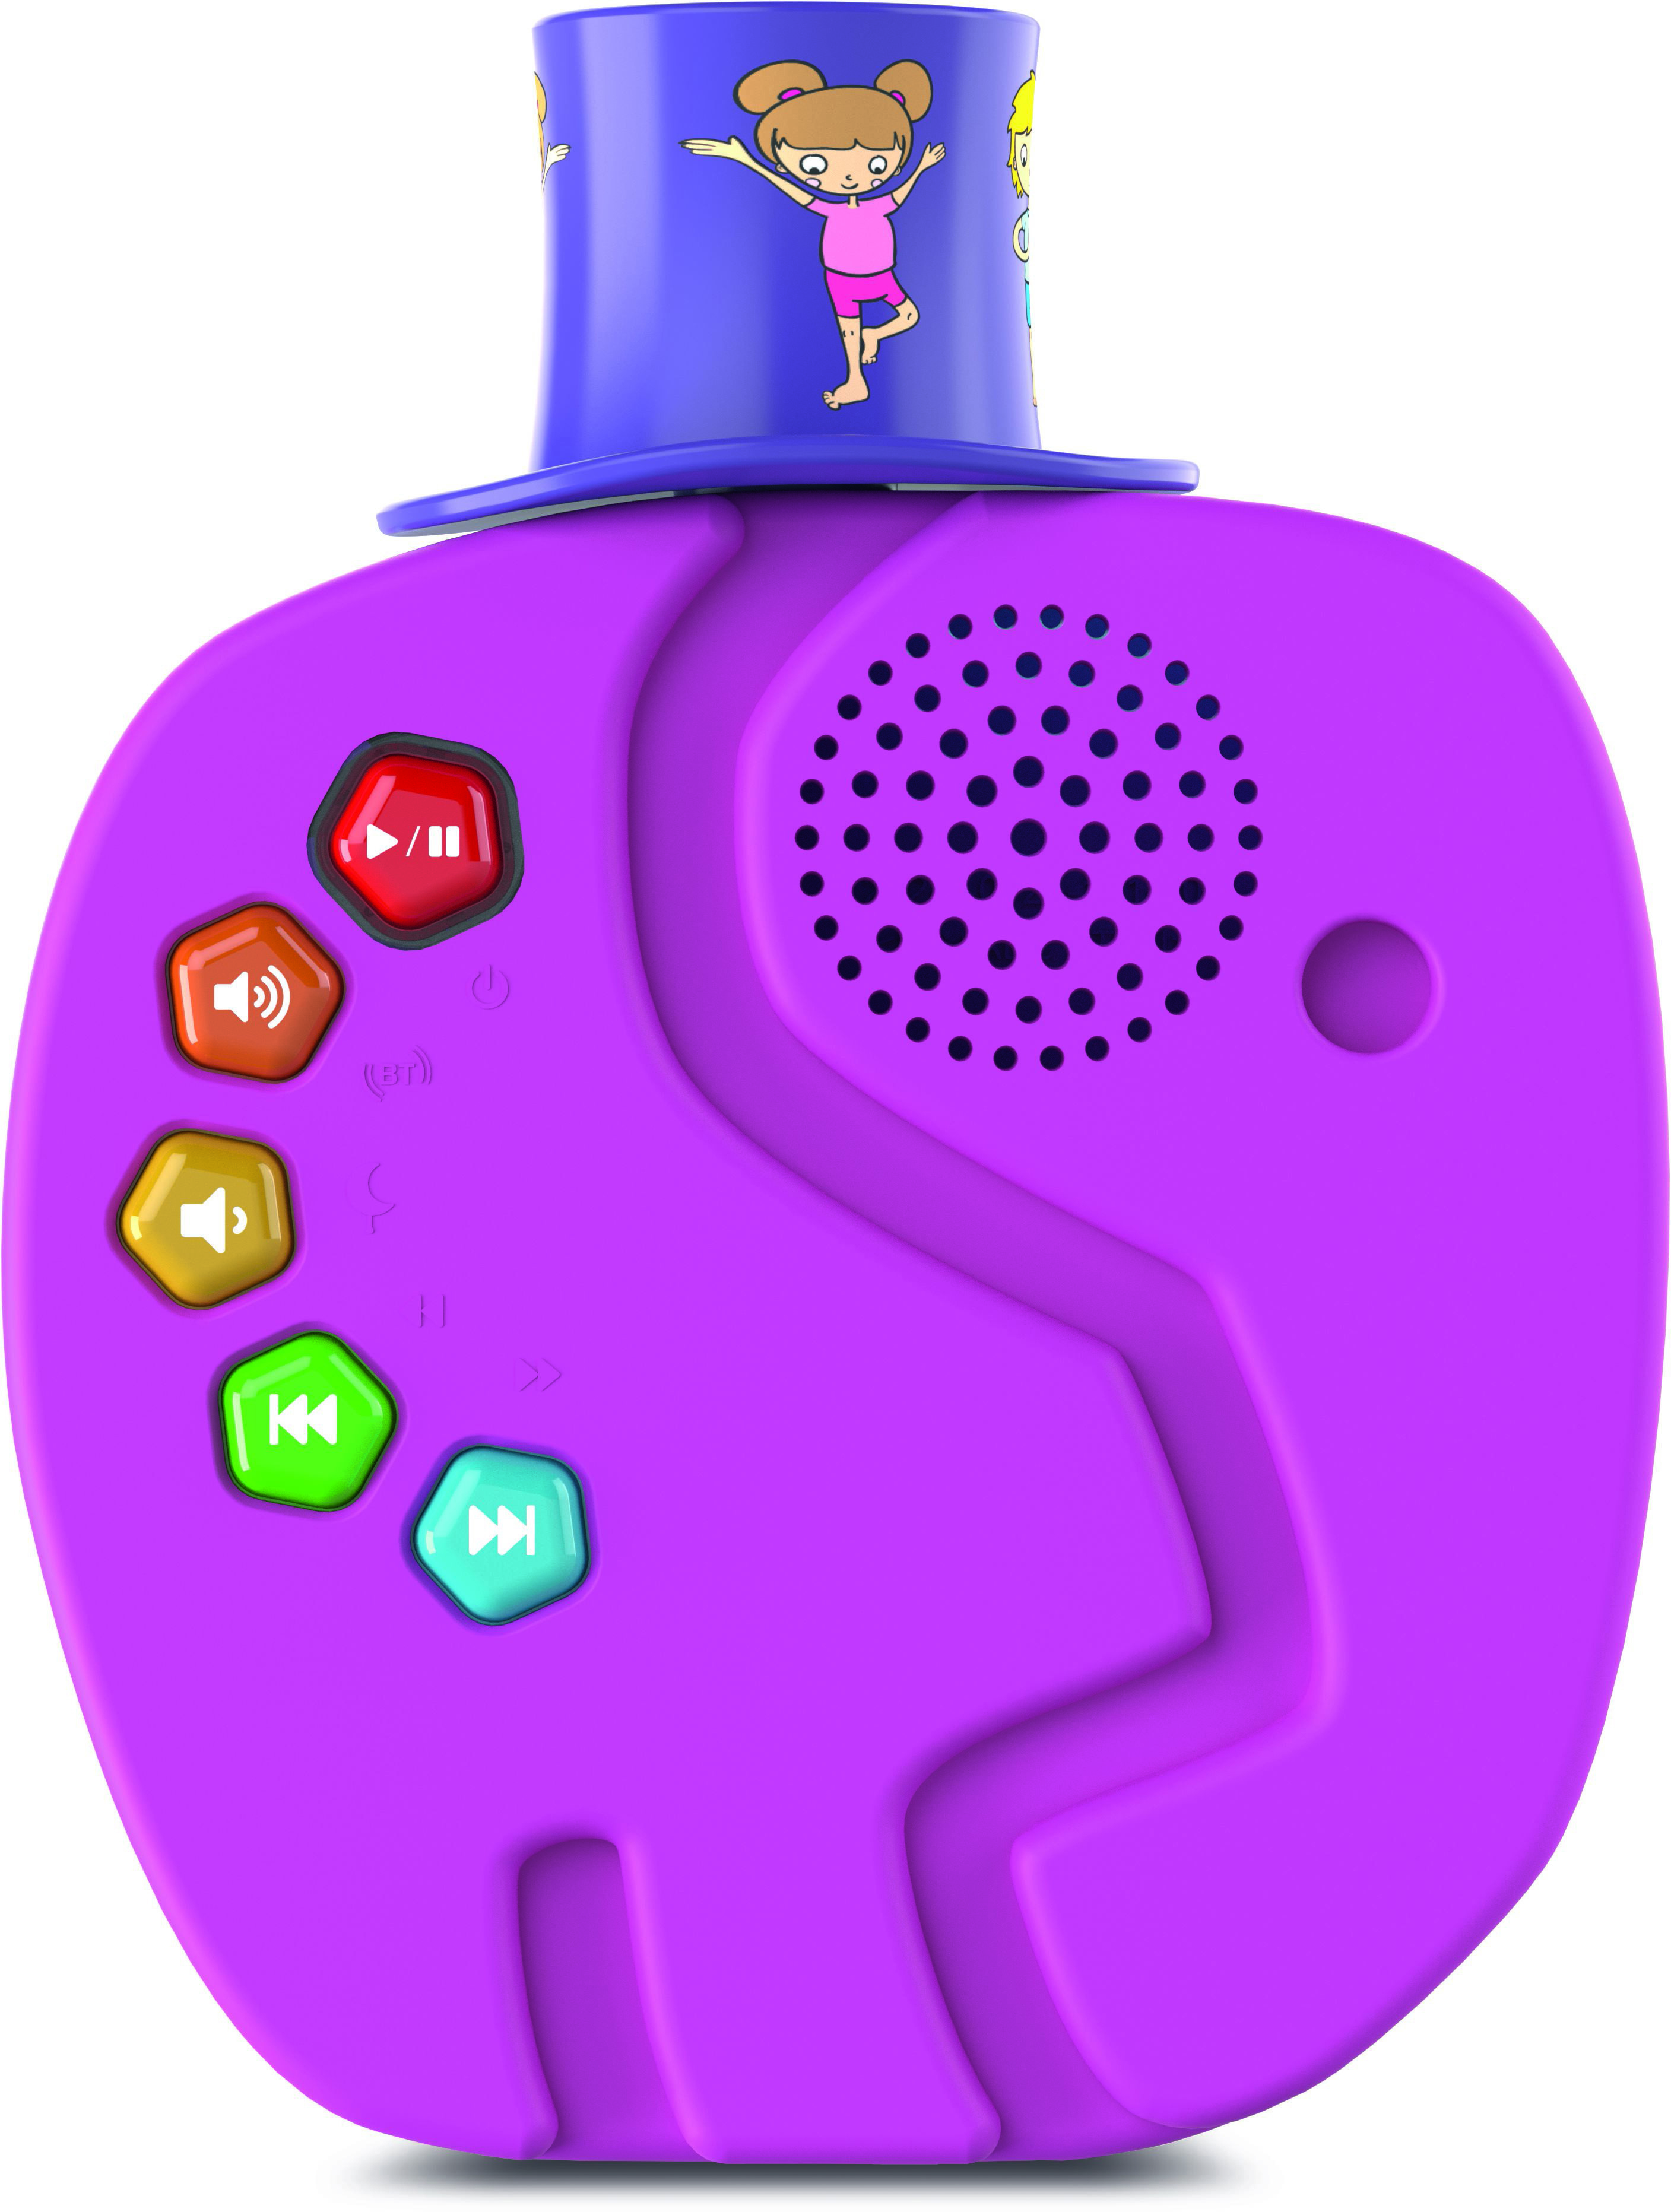 TECHNISAT TECHNIFANT-Look, Kinder Pink TECHNIFANT im Audioplayer für